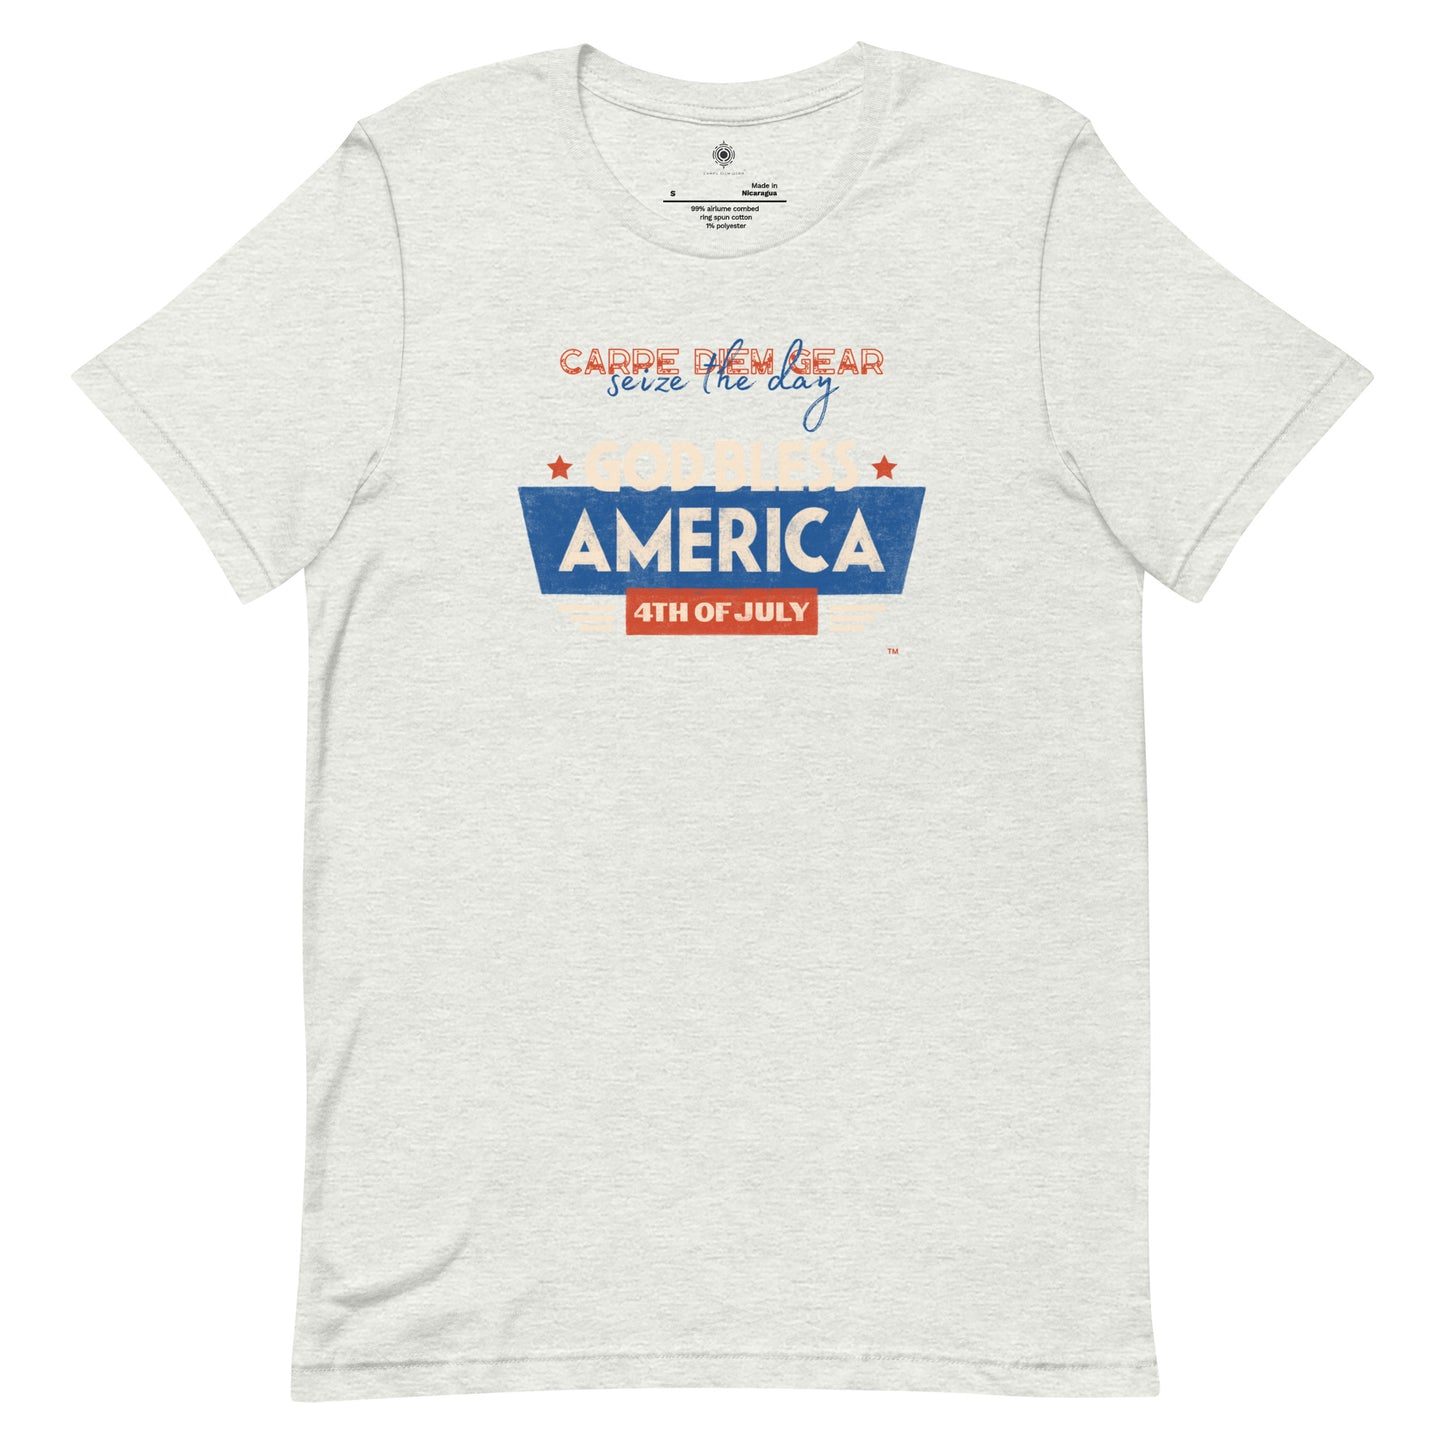 Carpe Diem Gear | Americana  | God Bless America | Unisex 100% Cotton T-Shirt